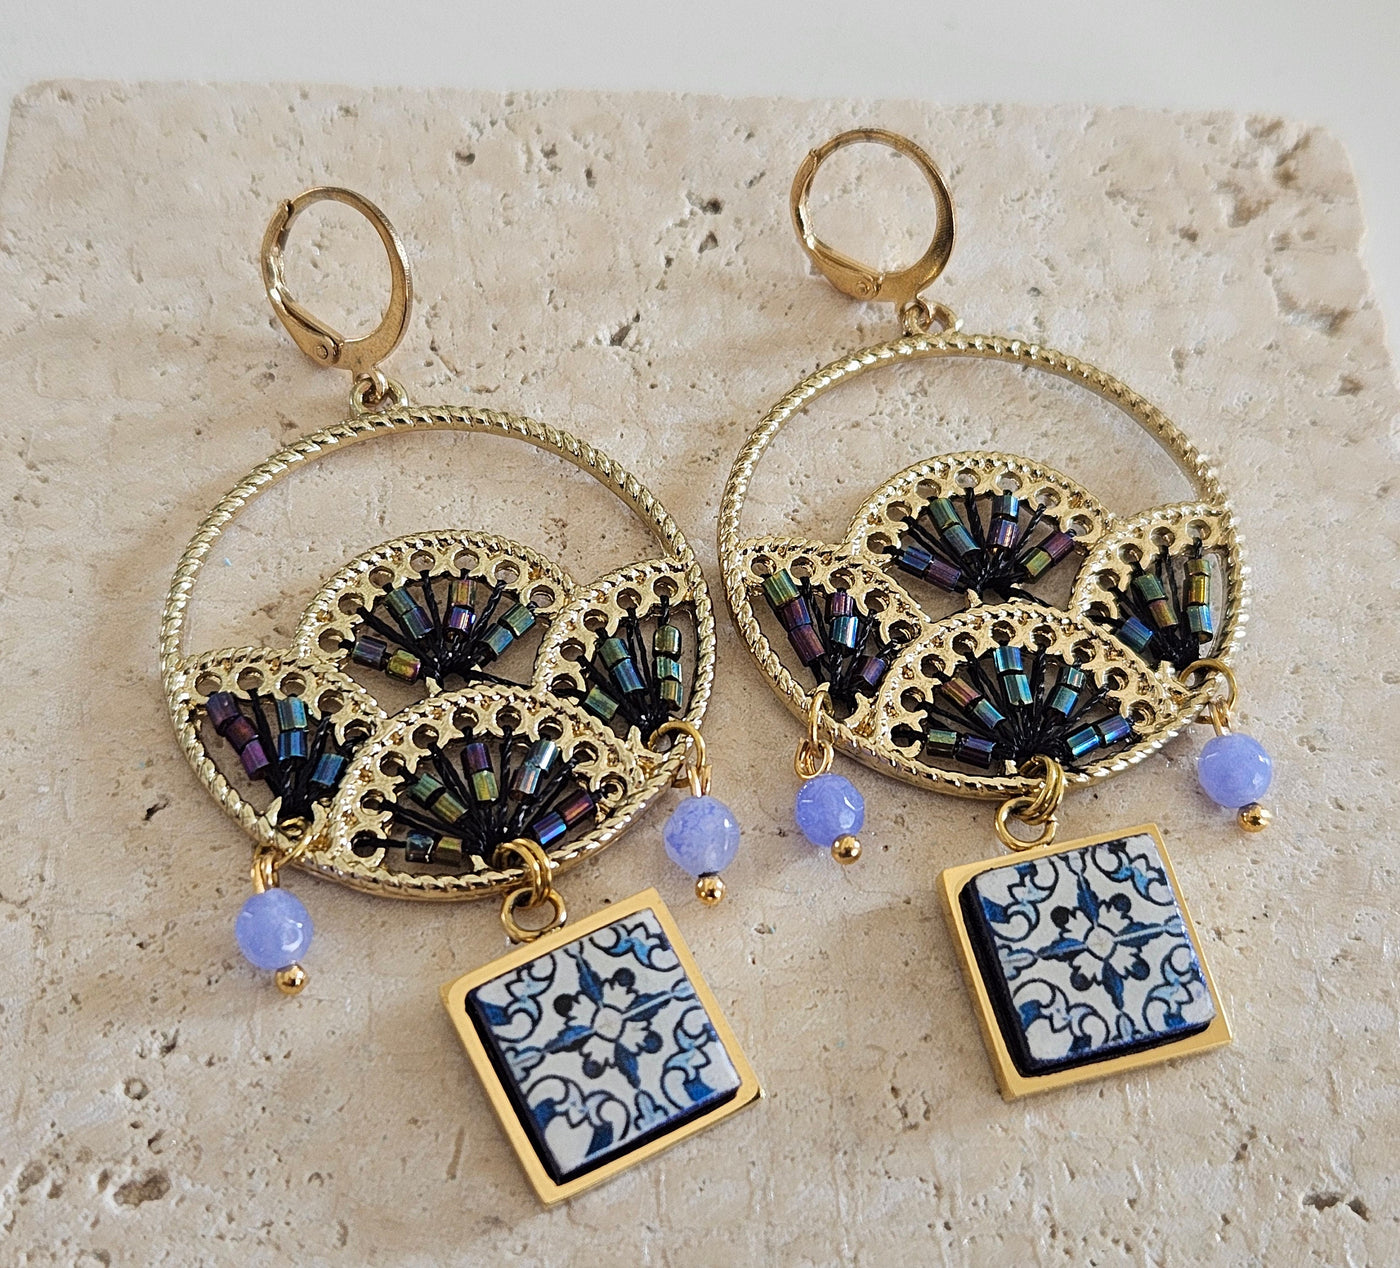 Portugal Hoop Tile Fan Earrings Amethyst Stones Natural Iridescent Blue Antique Azulejo Earring Majolica Tile Jewelry Geometric Gold Hoops